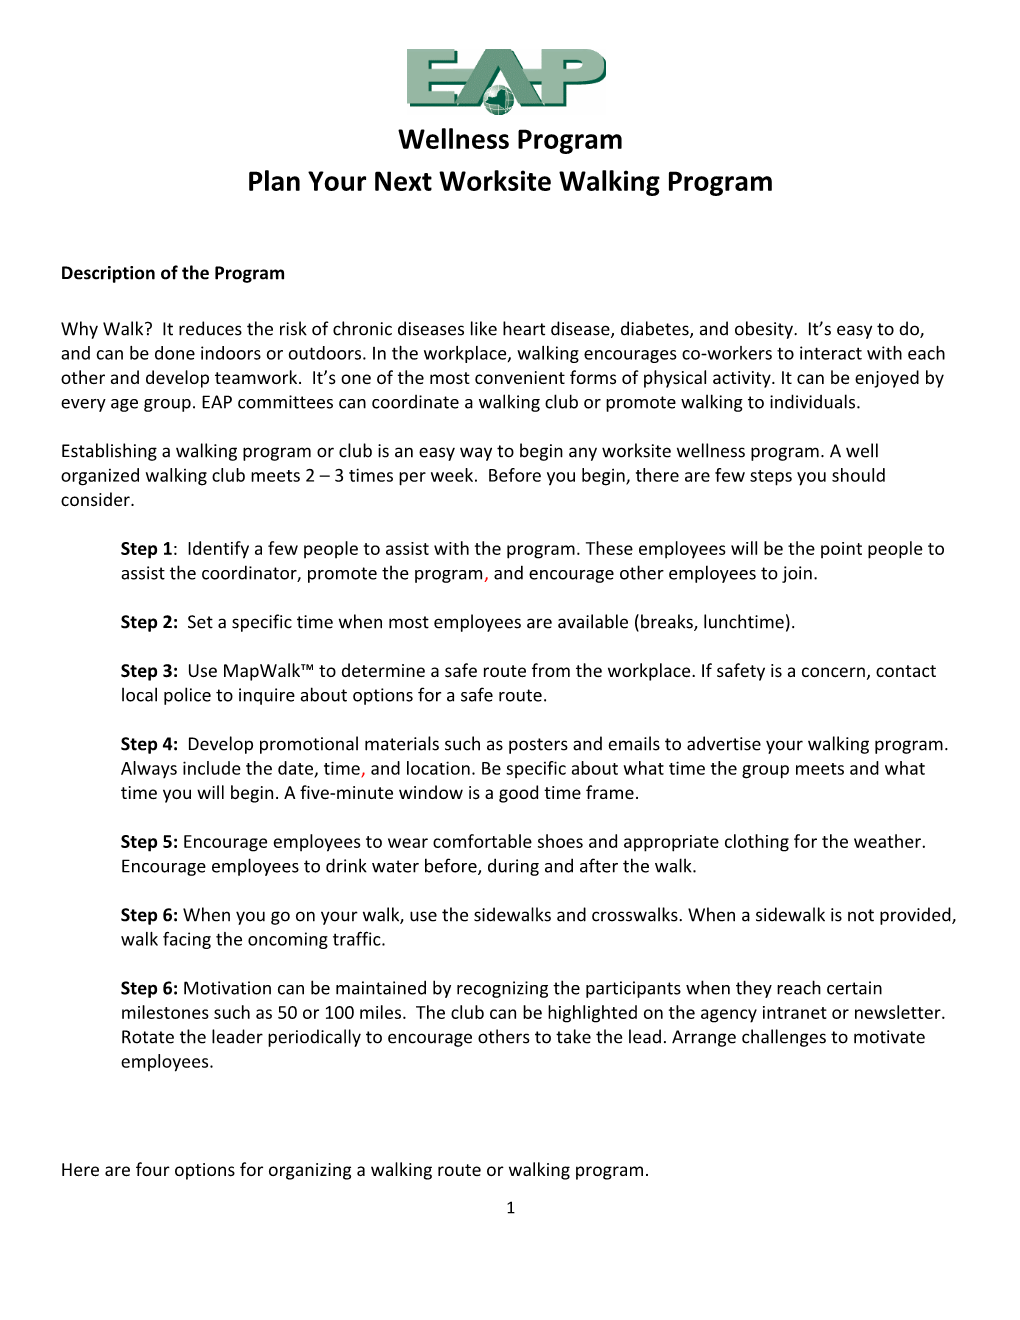 Plan Your Next Worksite Walking Program